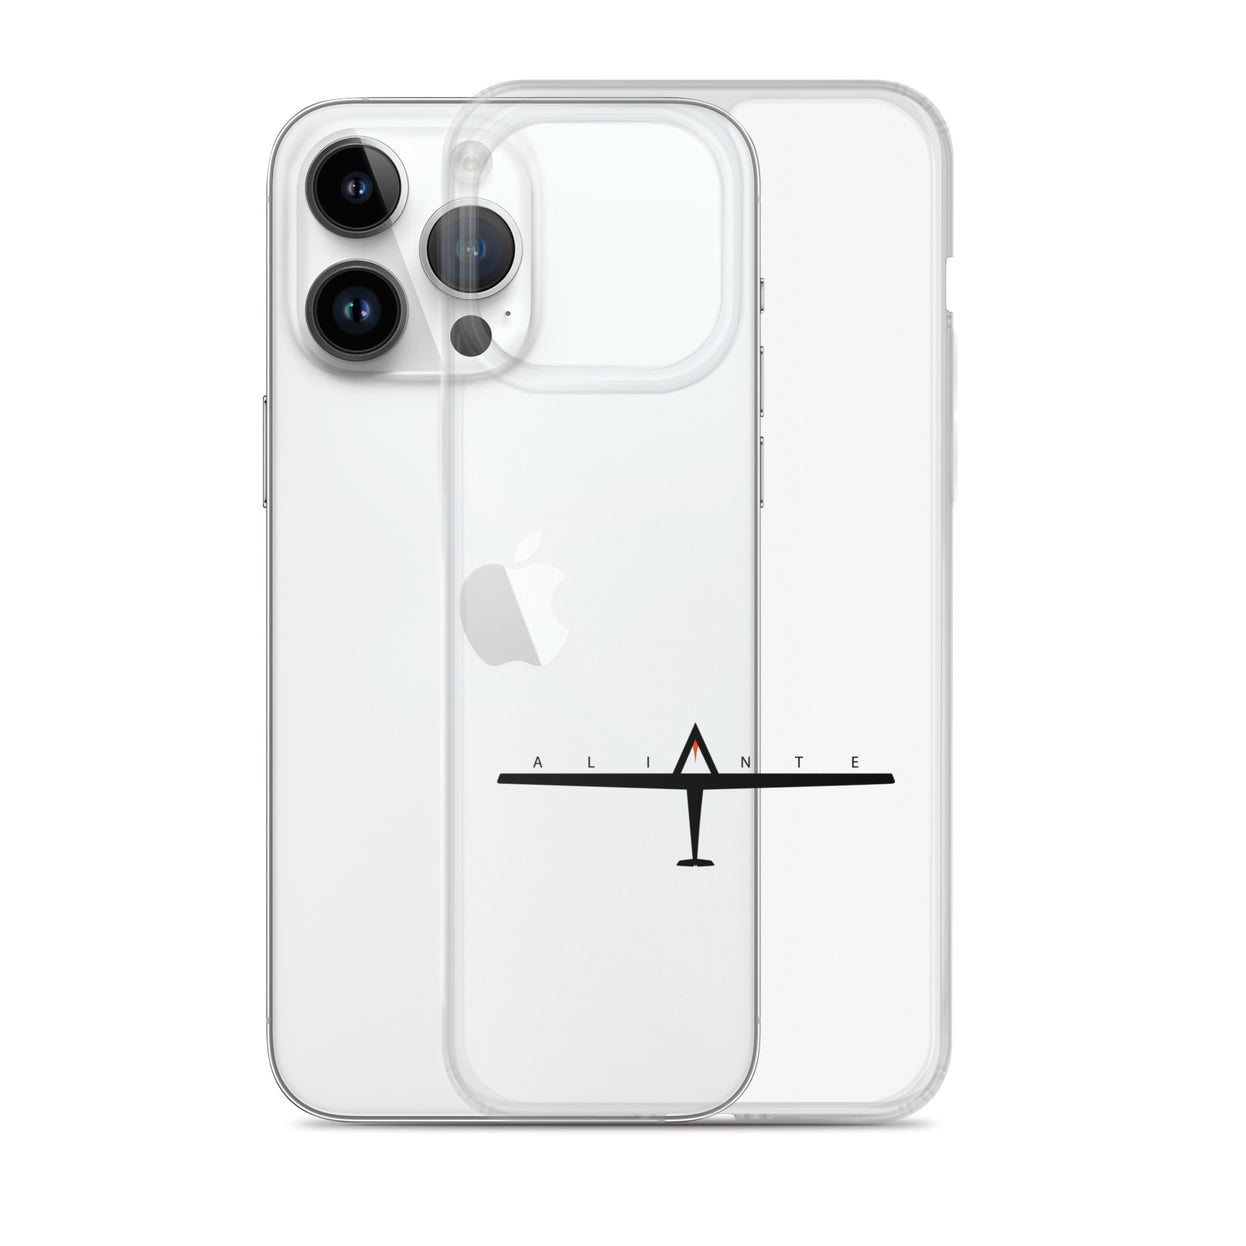 Avionics cover for iPhone®